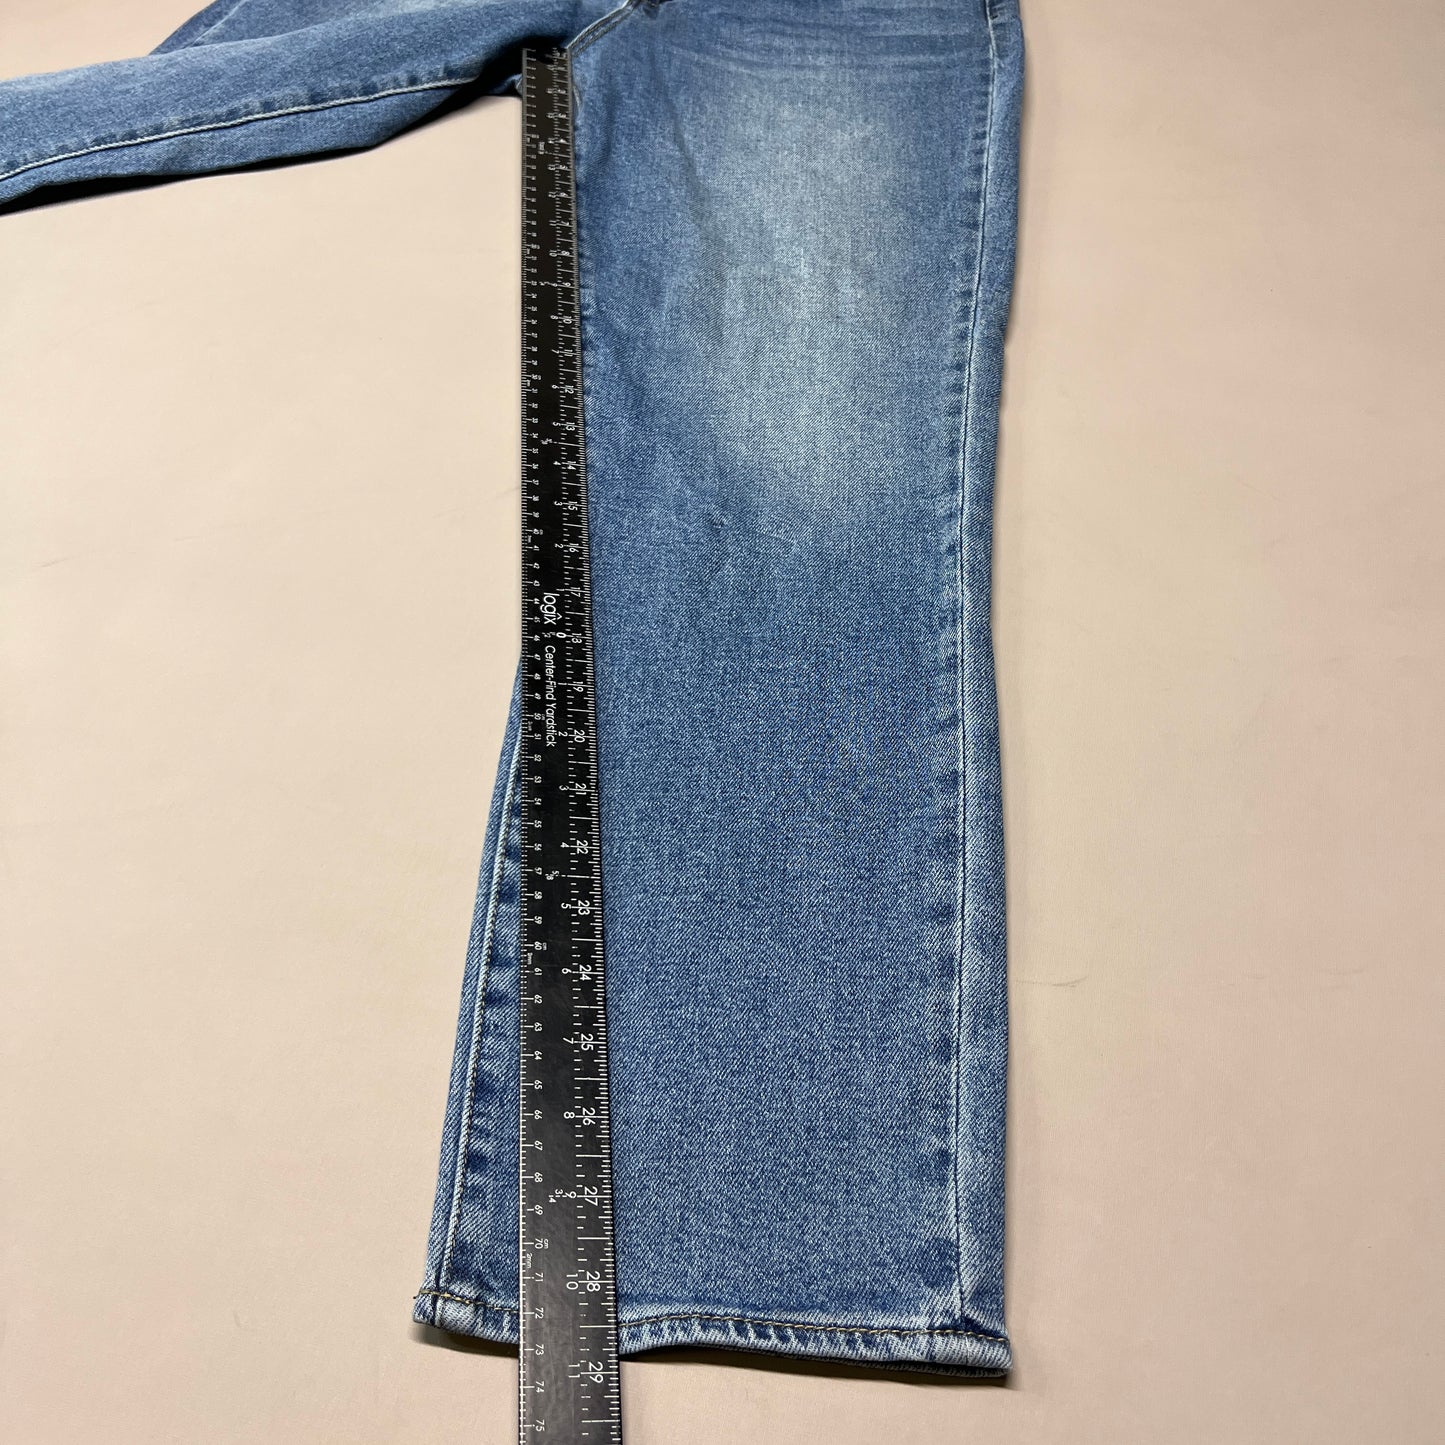 ARTICLES OF SOCIETY OMAO High Rise Denim Jeans Women's Sz 29 Blue 4009TQ3-716 (New)